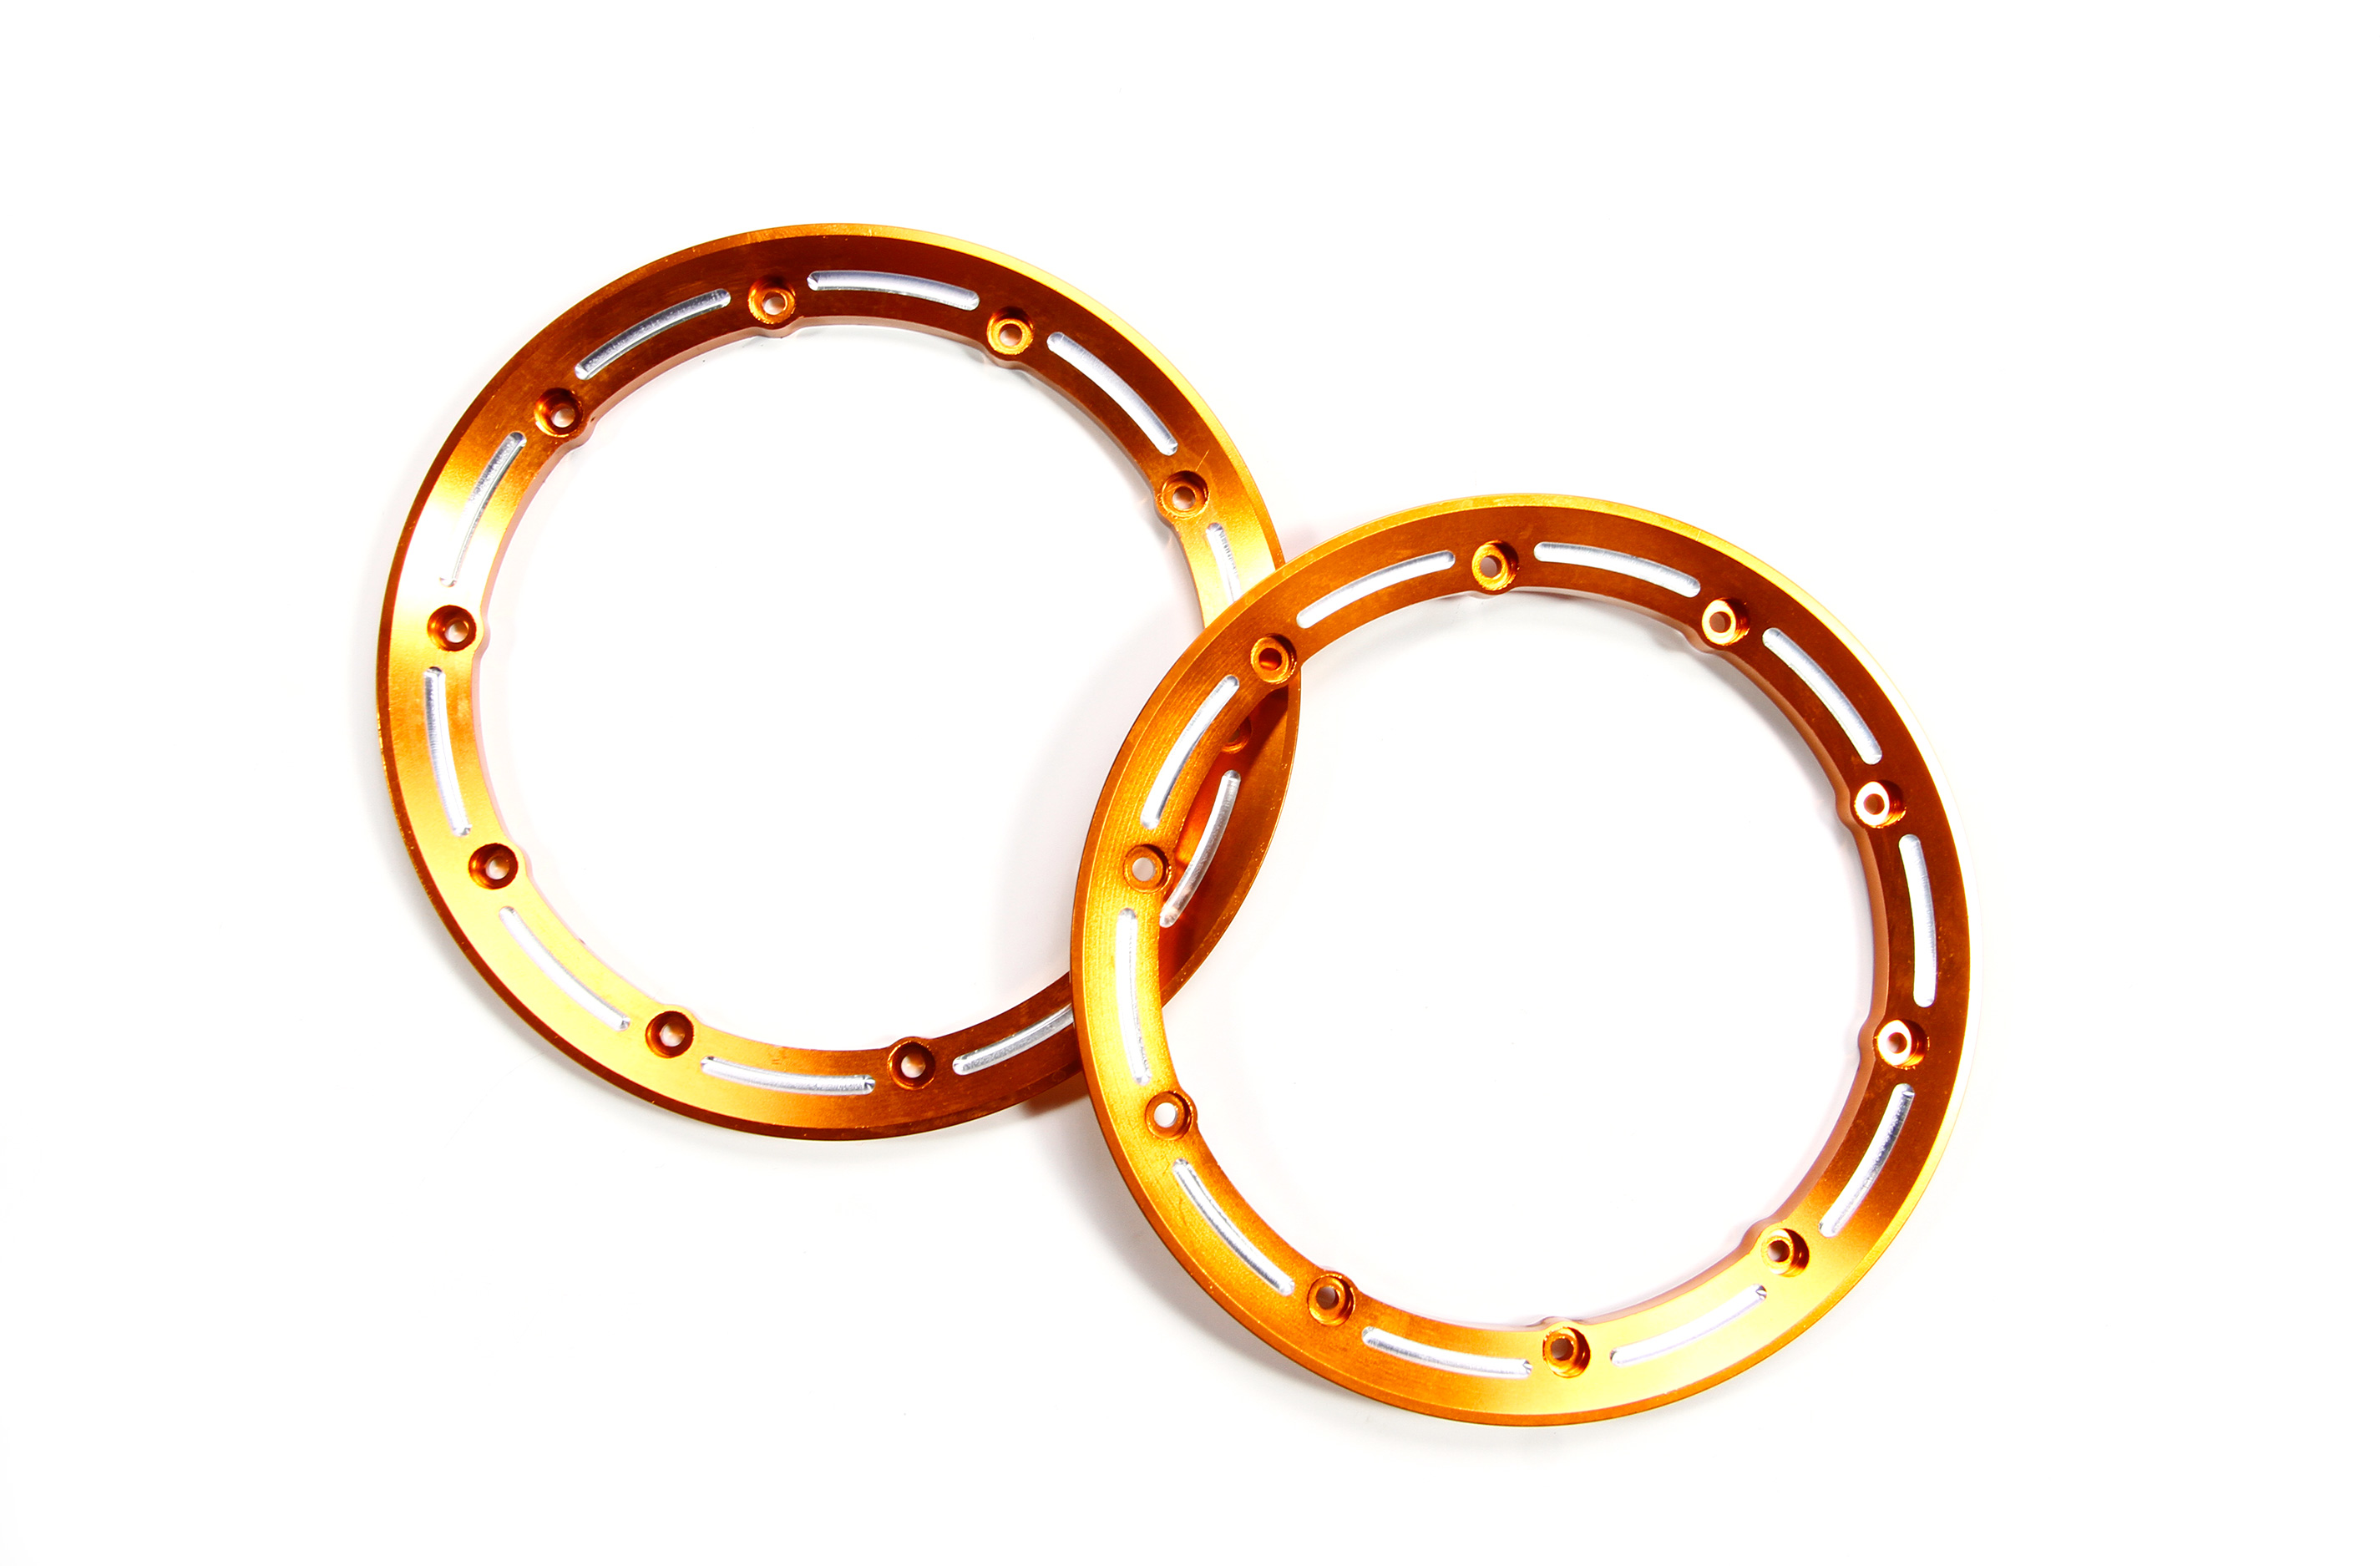 AREA-5T-011/01 Aluminum outer beadlock rings, orange Losi 5ive-T